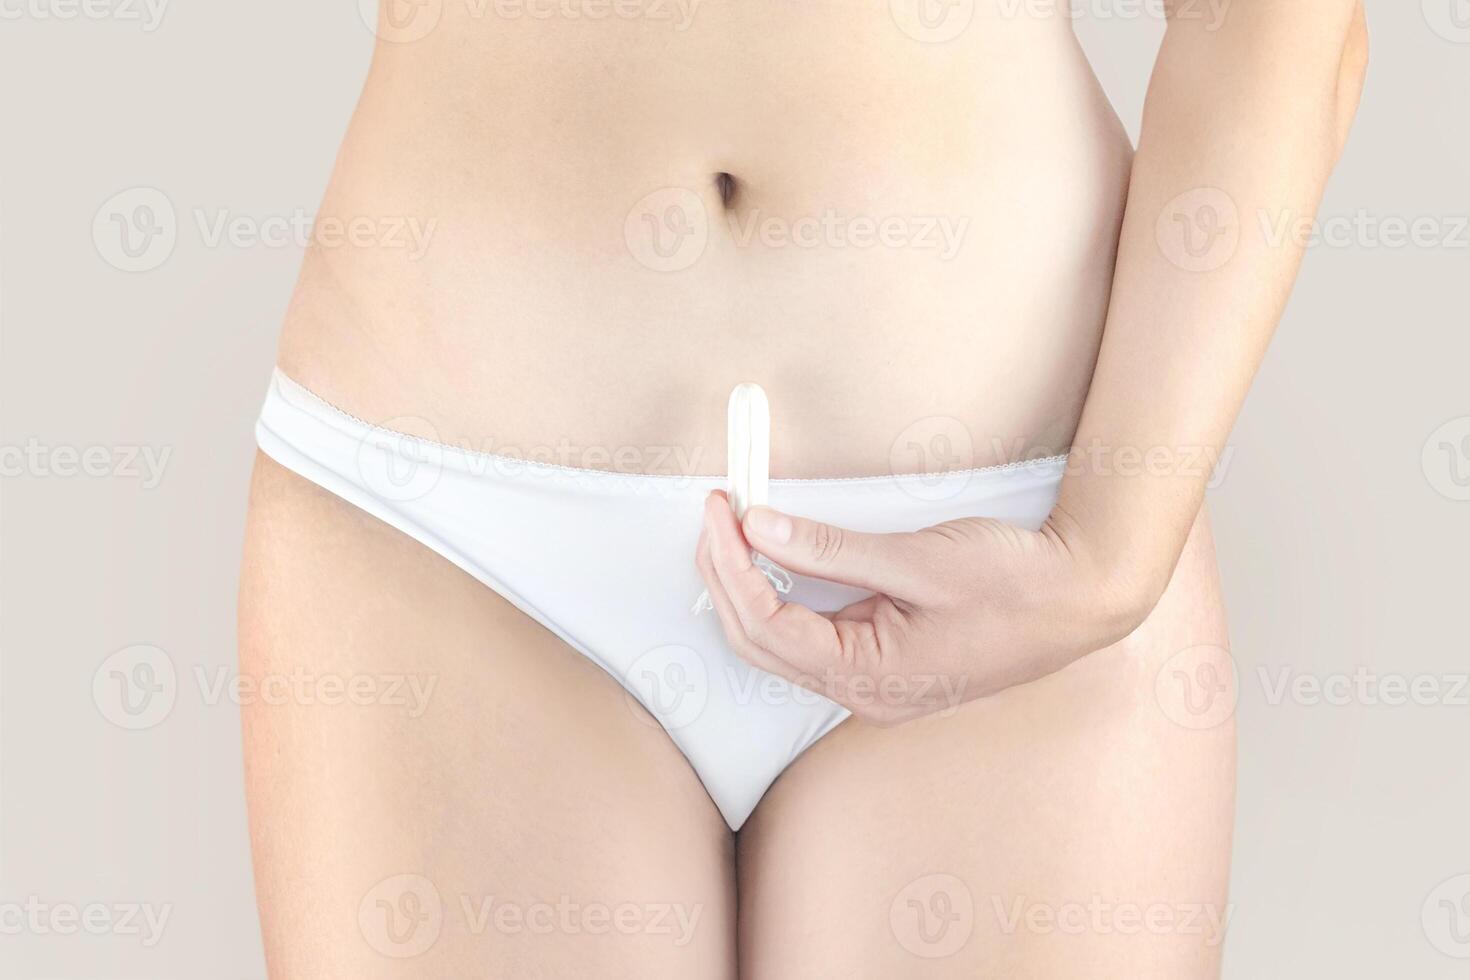 kvinna innehav en menstruation bomull tampong i henne hand, i vit underkläder naken beige bakgrund stänga upp foto